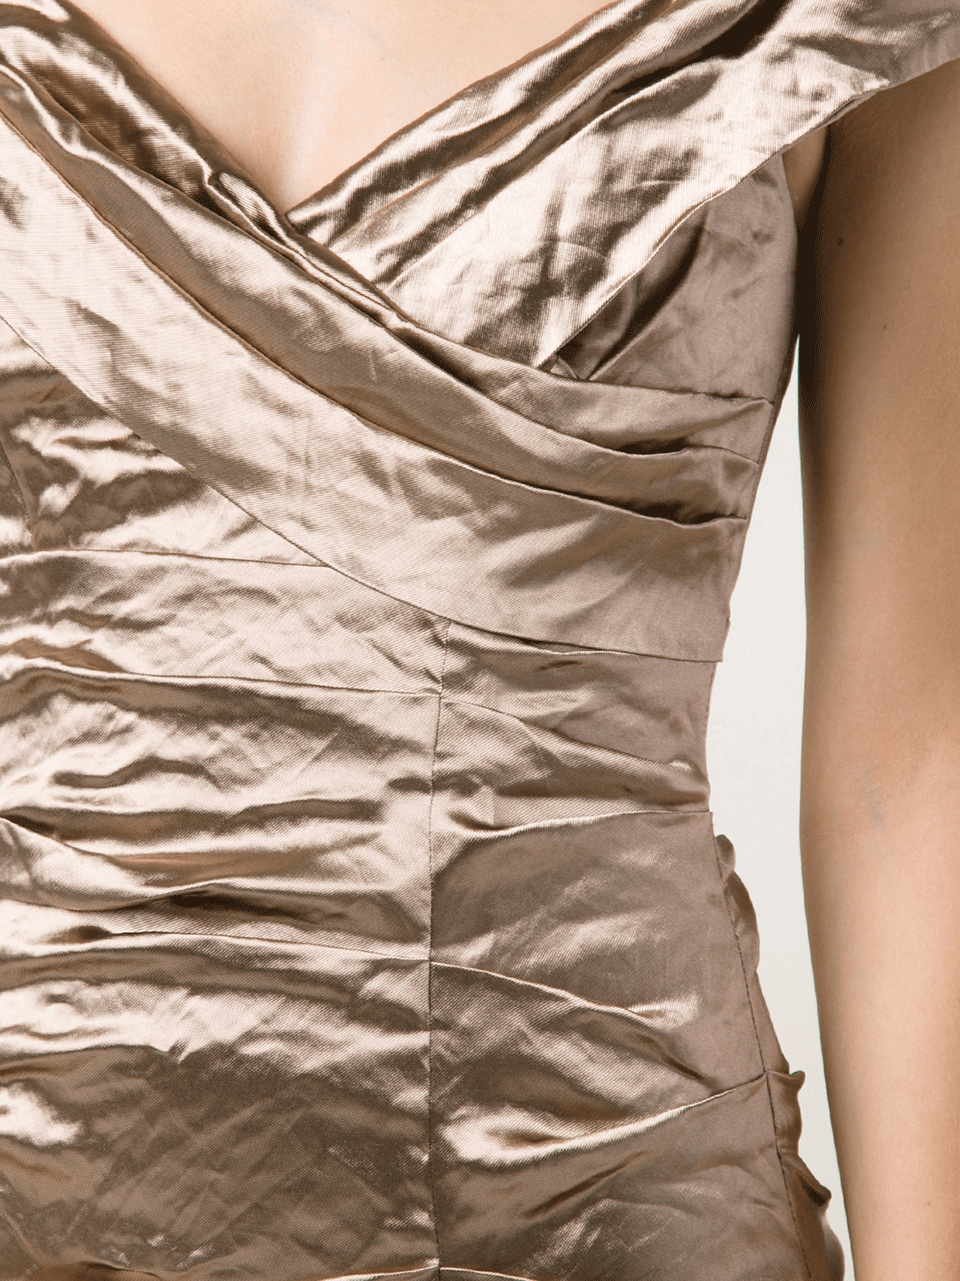 NICOLE MILLER-Wrap Top Gown-